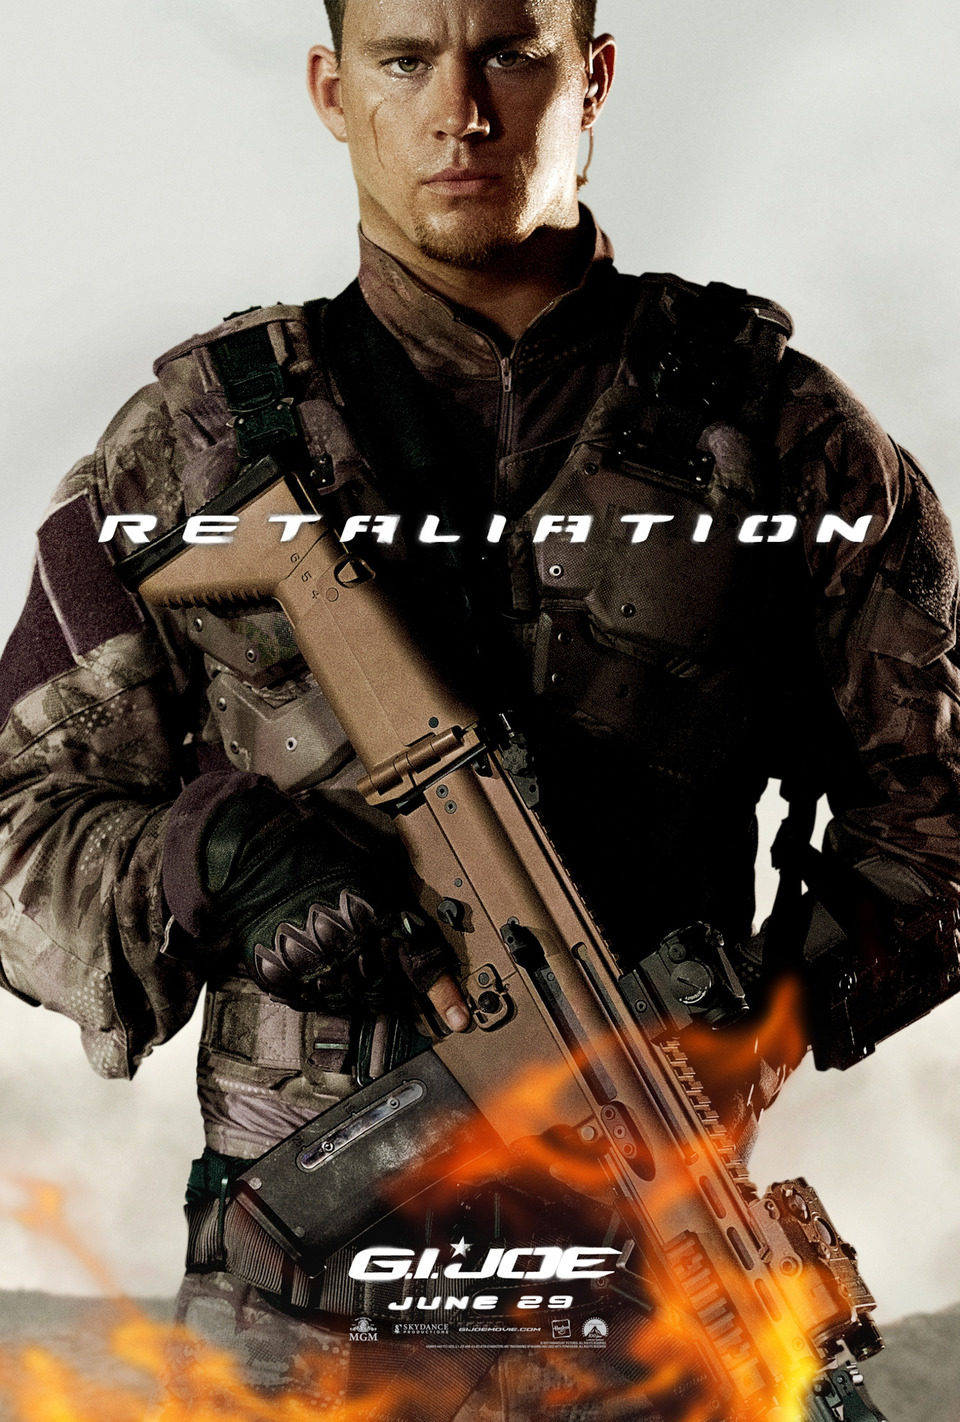 Poster of G.I. Joe 2: Retaliation - Channing Tatum